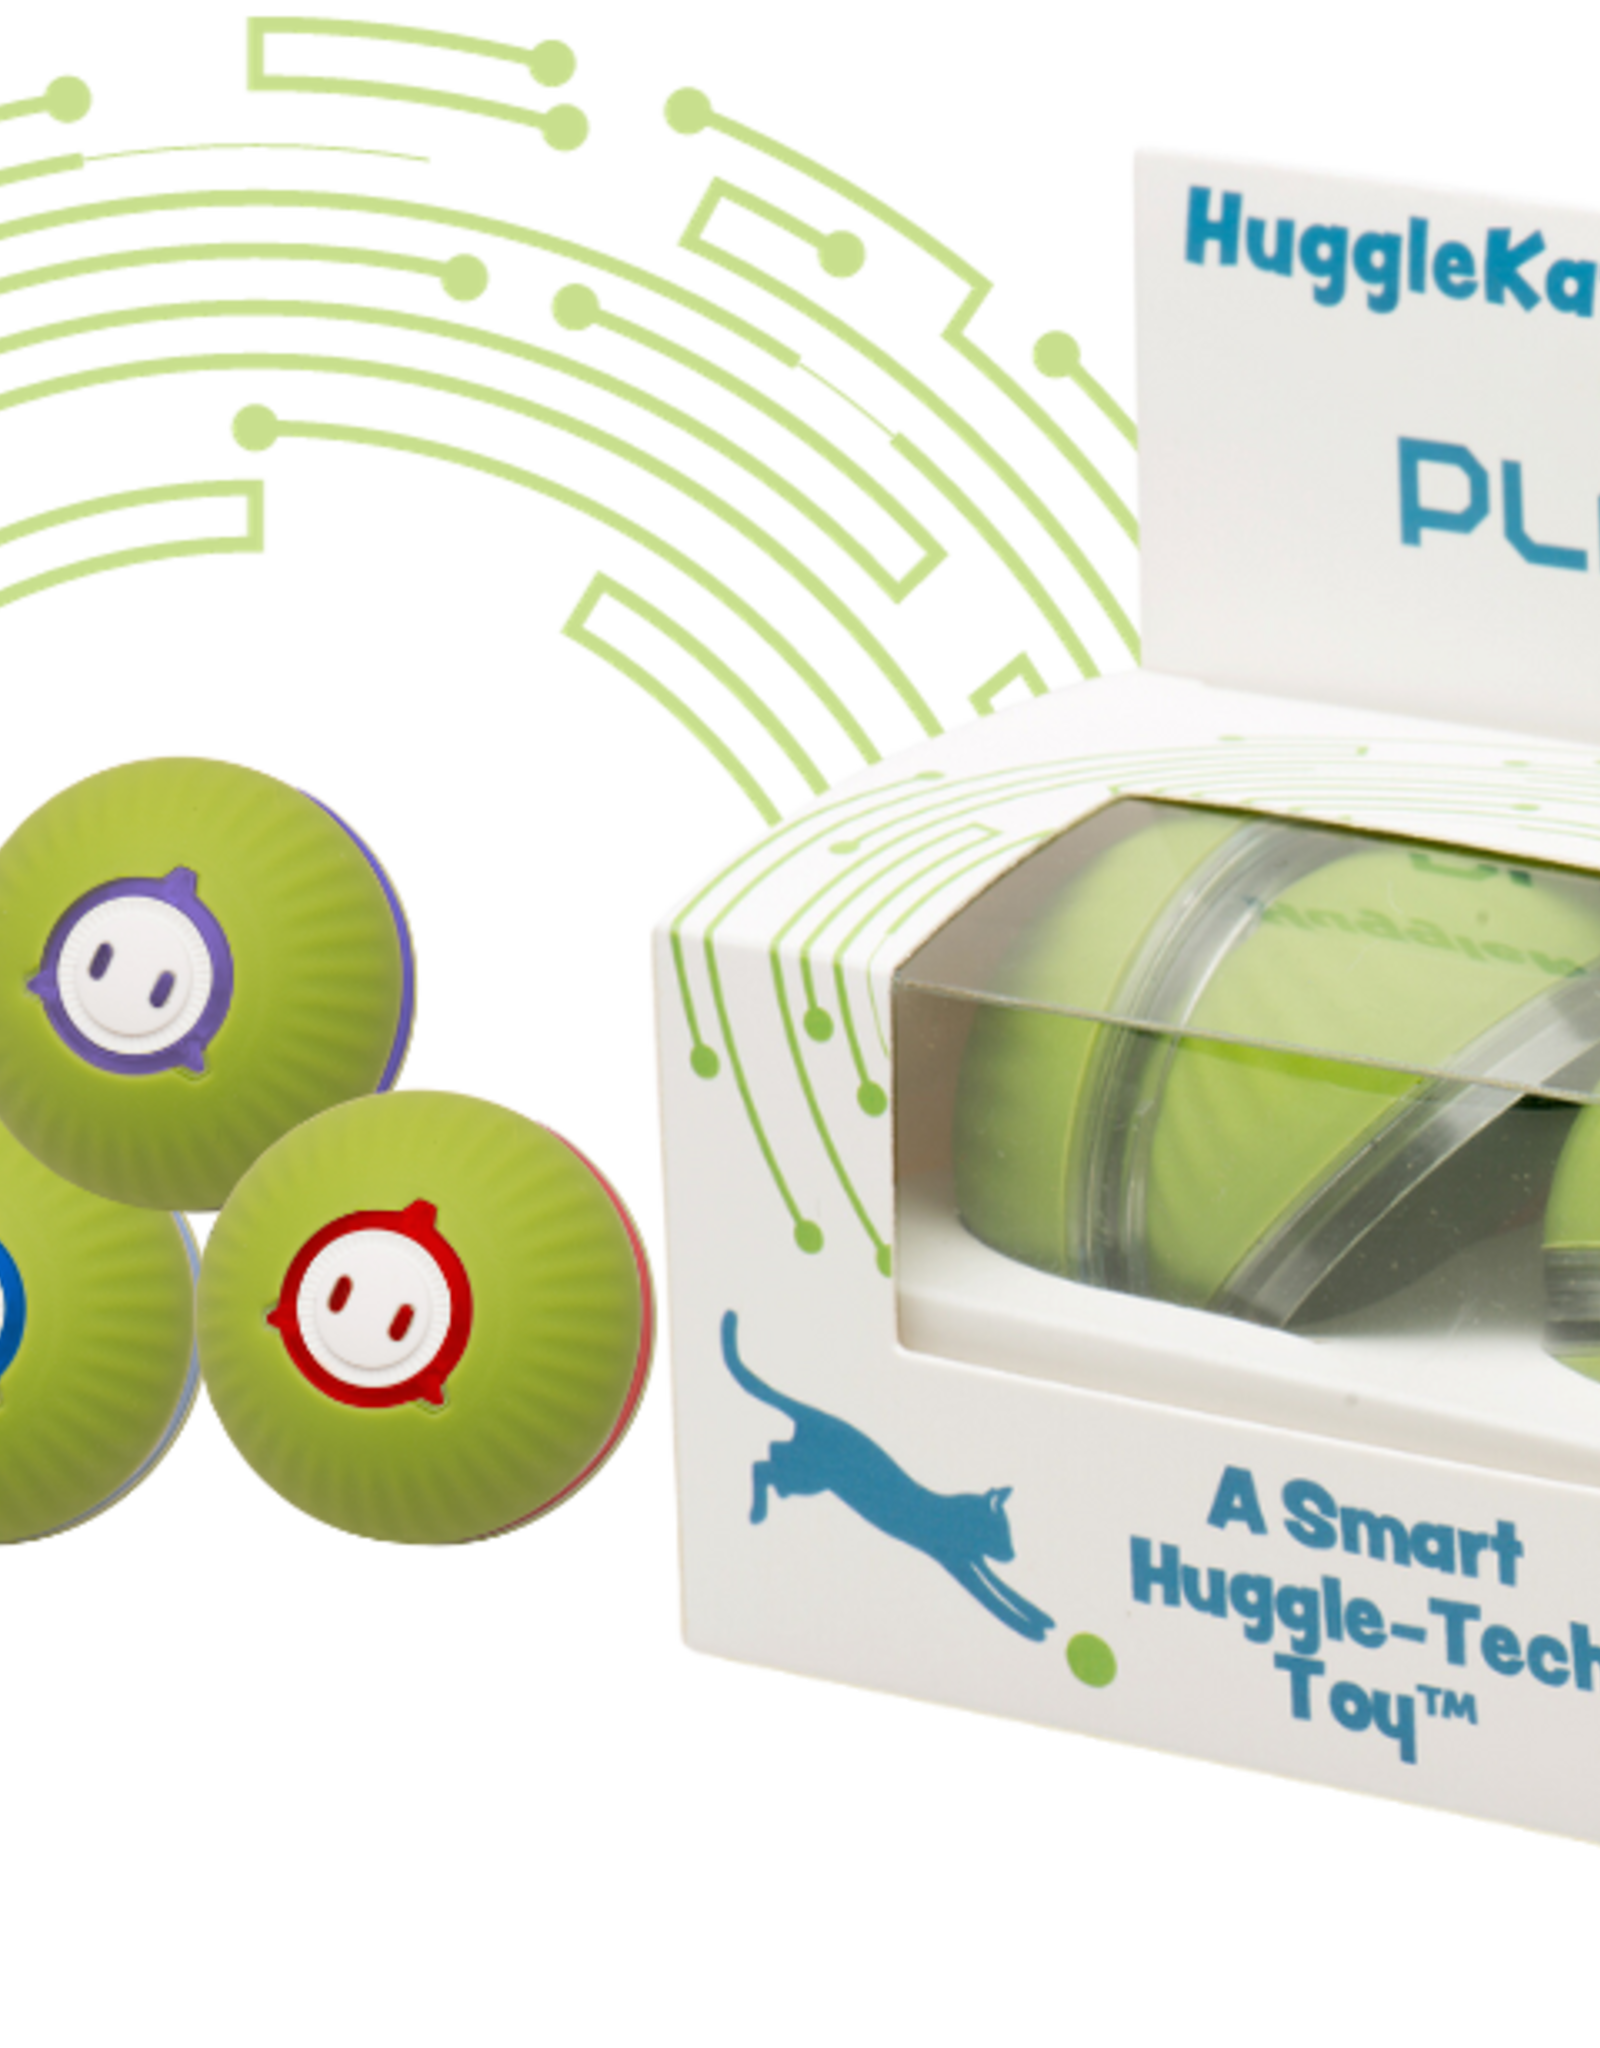 HuggleKats PlayKat Interactive Toy